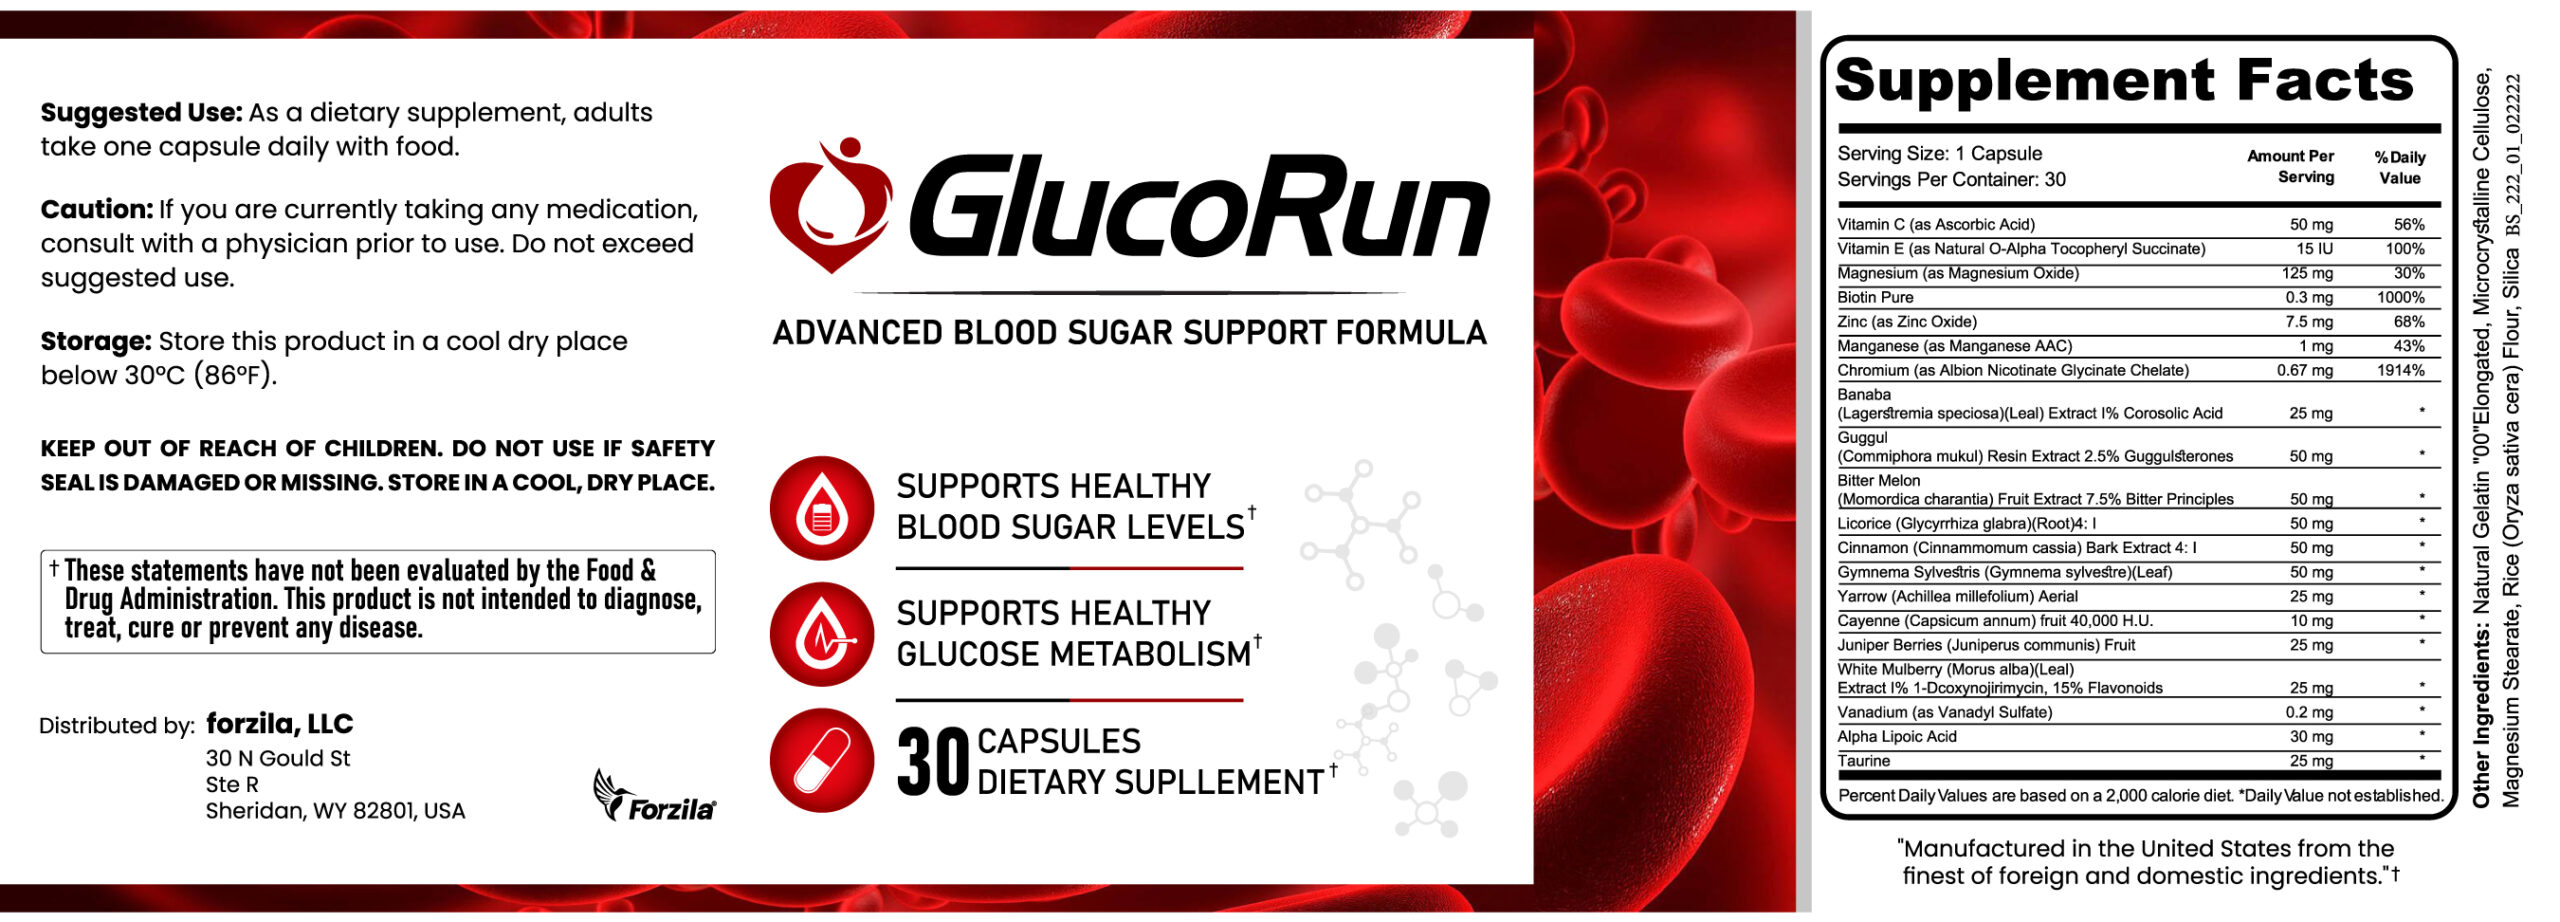 GlucoRun Supplement Facts